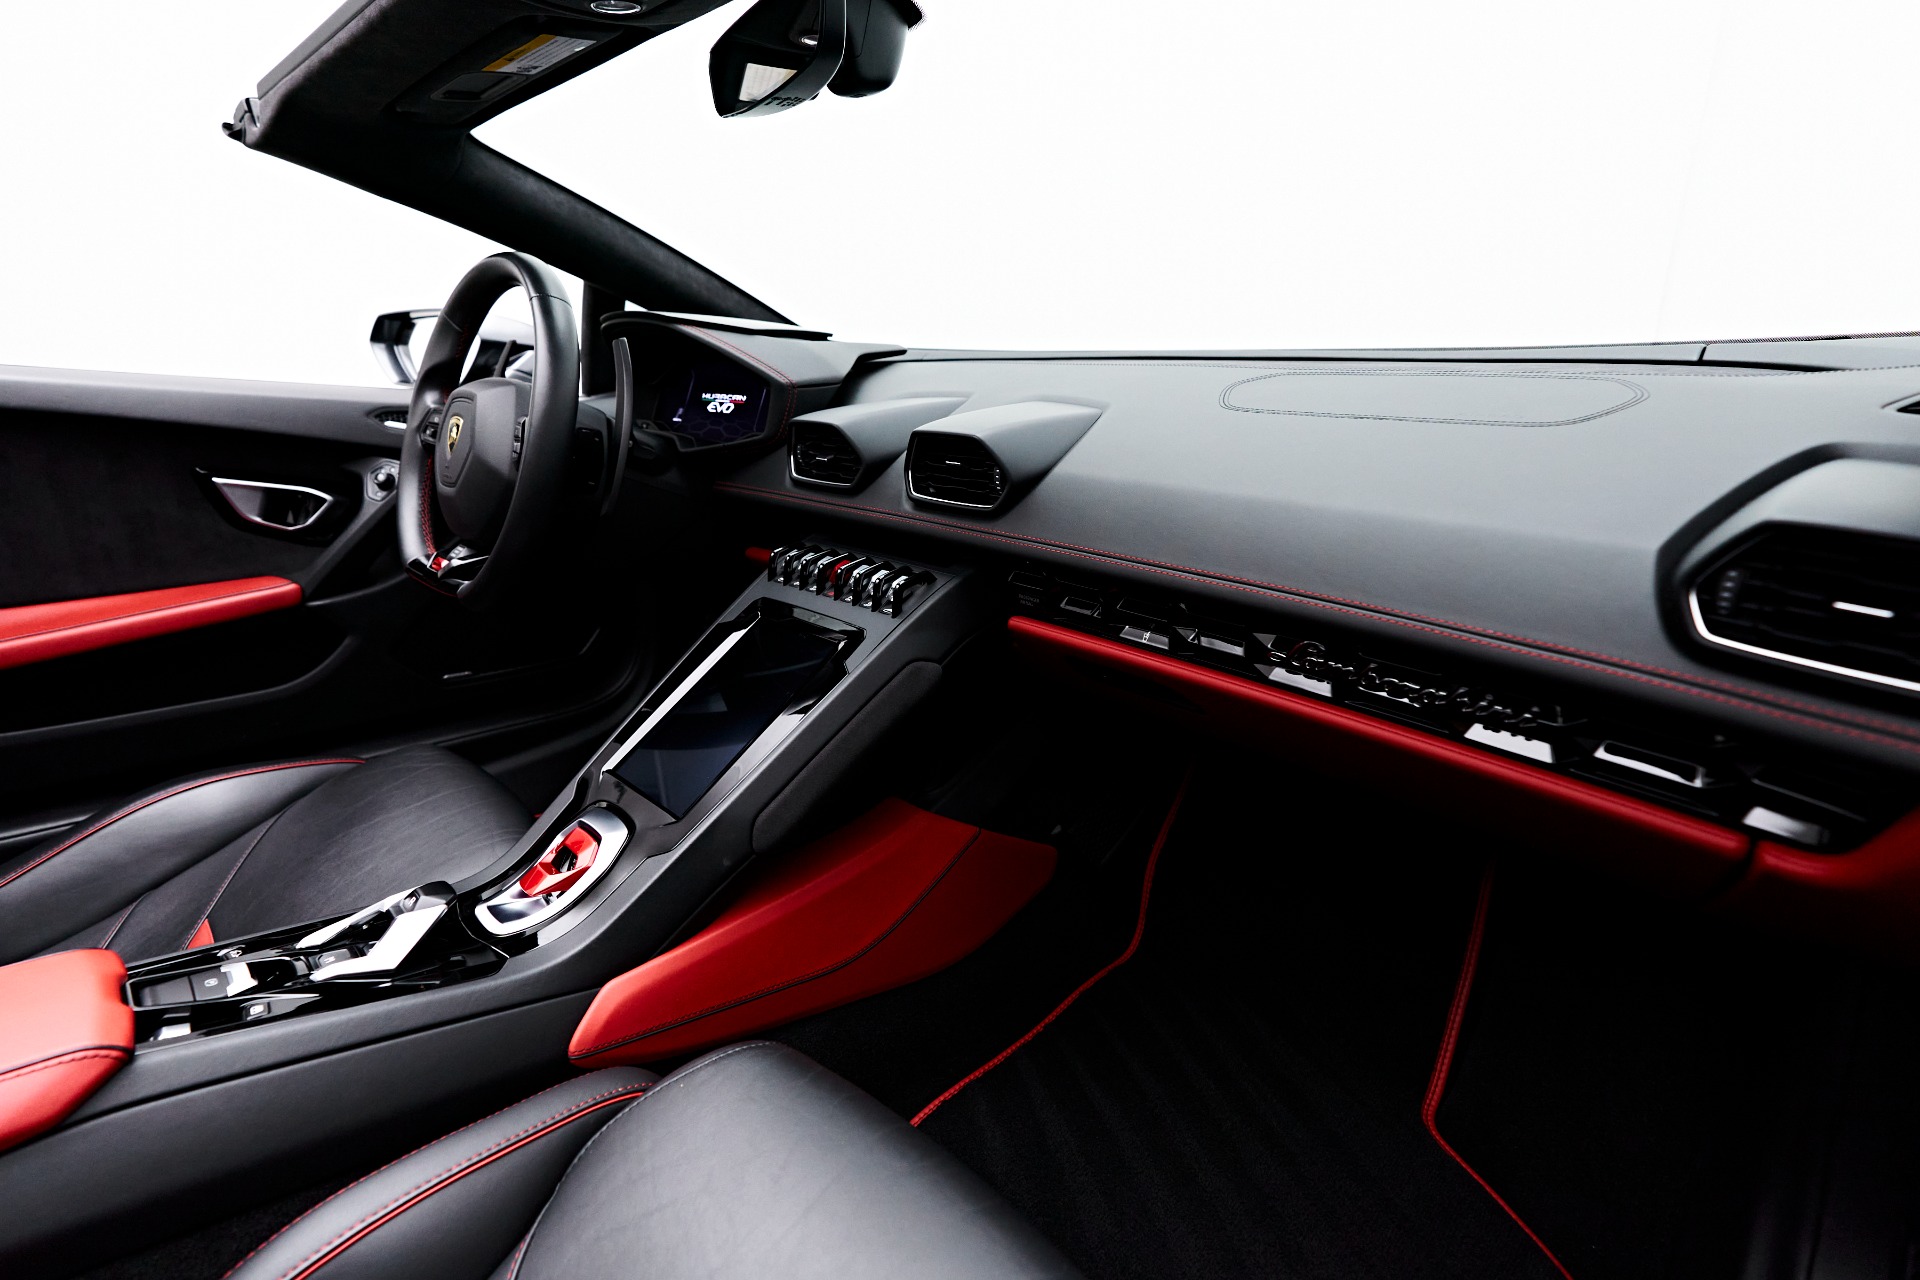 Used 2020 Lamborghini Huracan EVO Base For Sale (Sold) | Lotus 